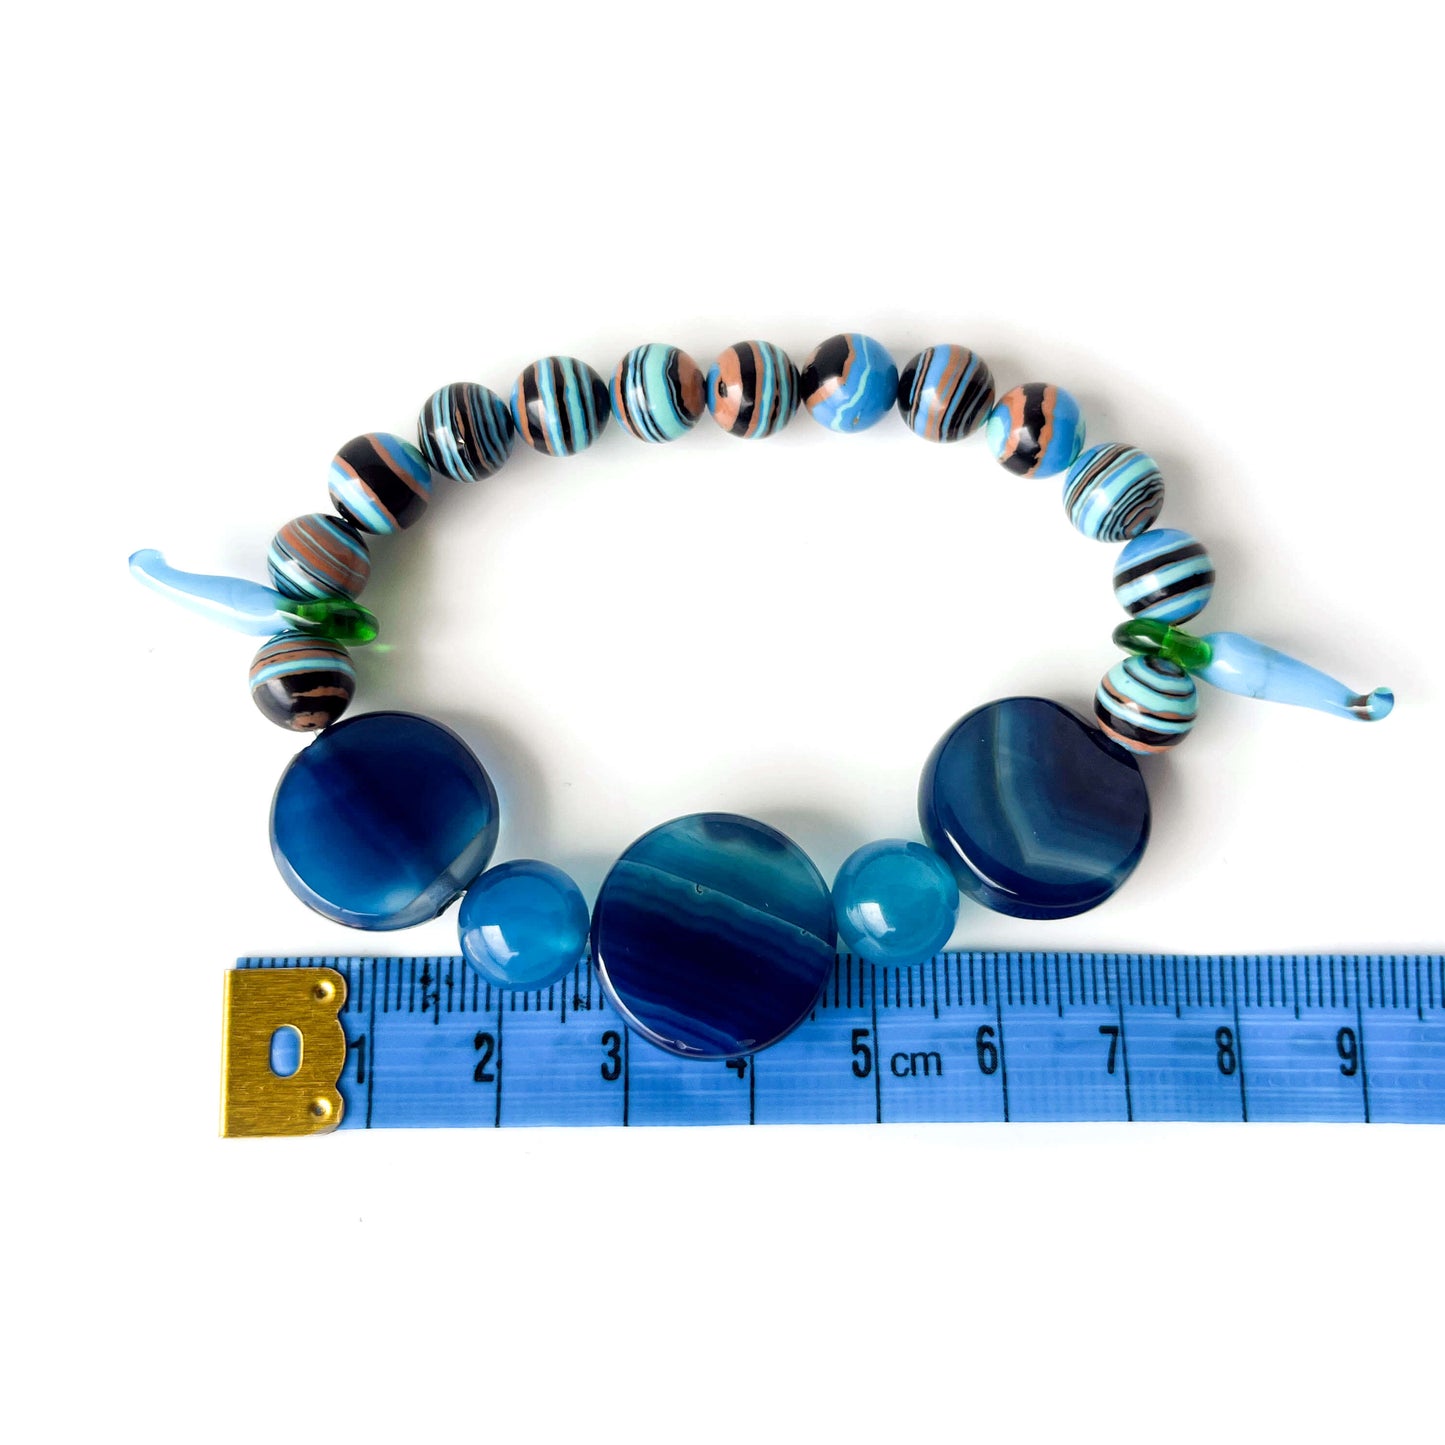 Necklace & bracelet Set Agate Mix & Crystals